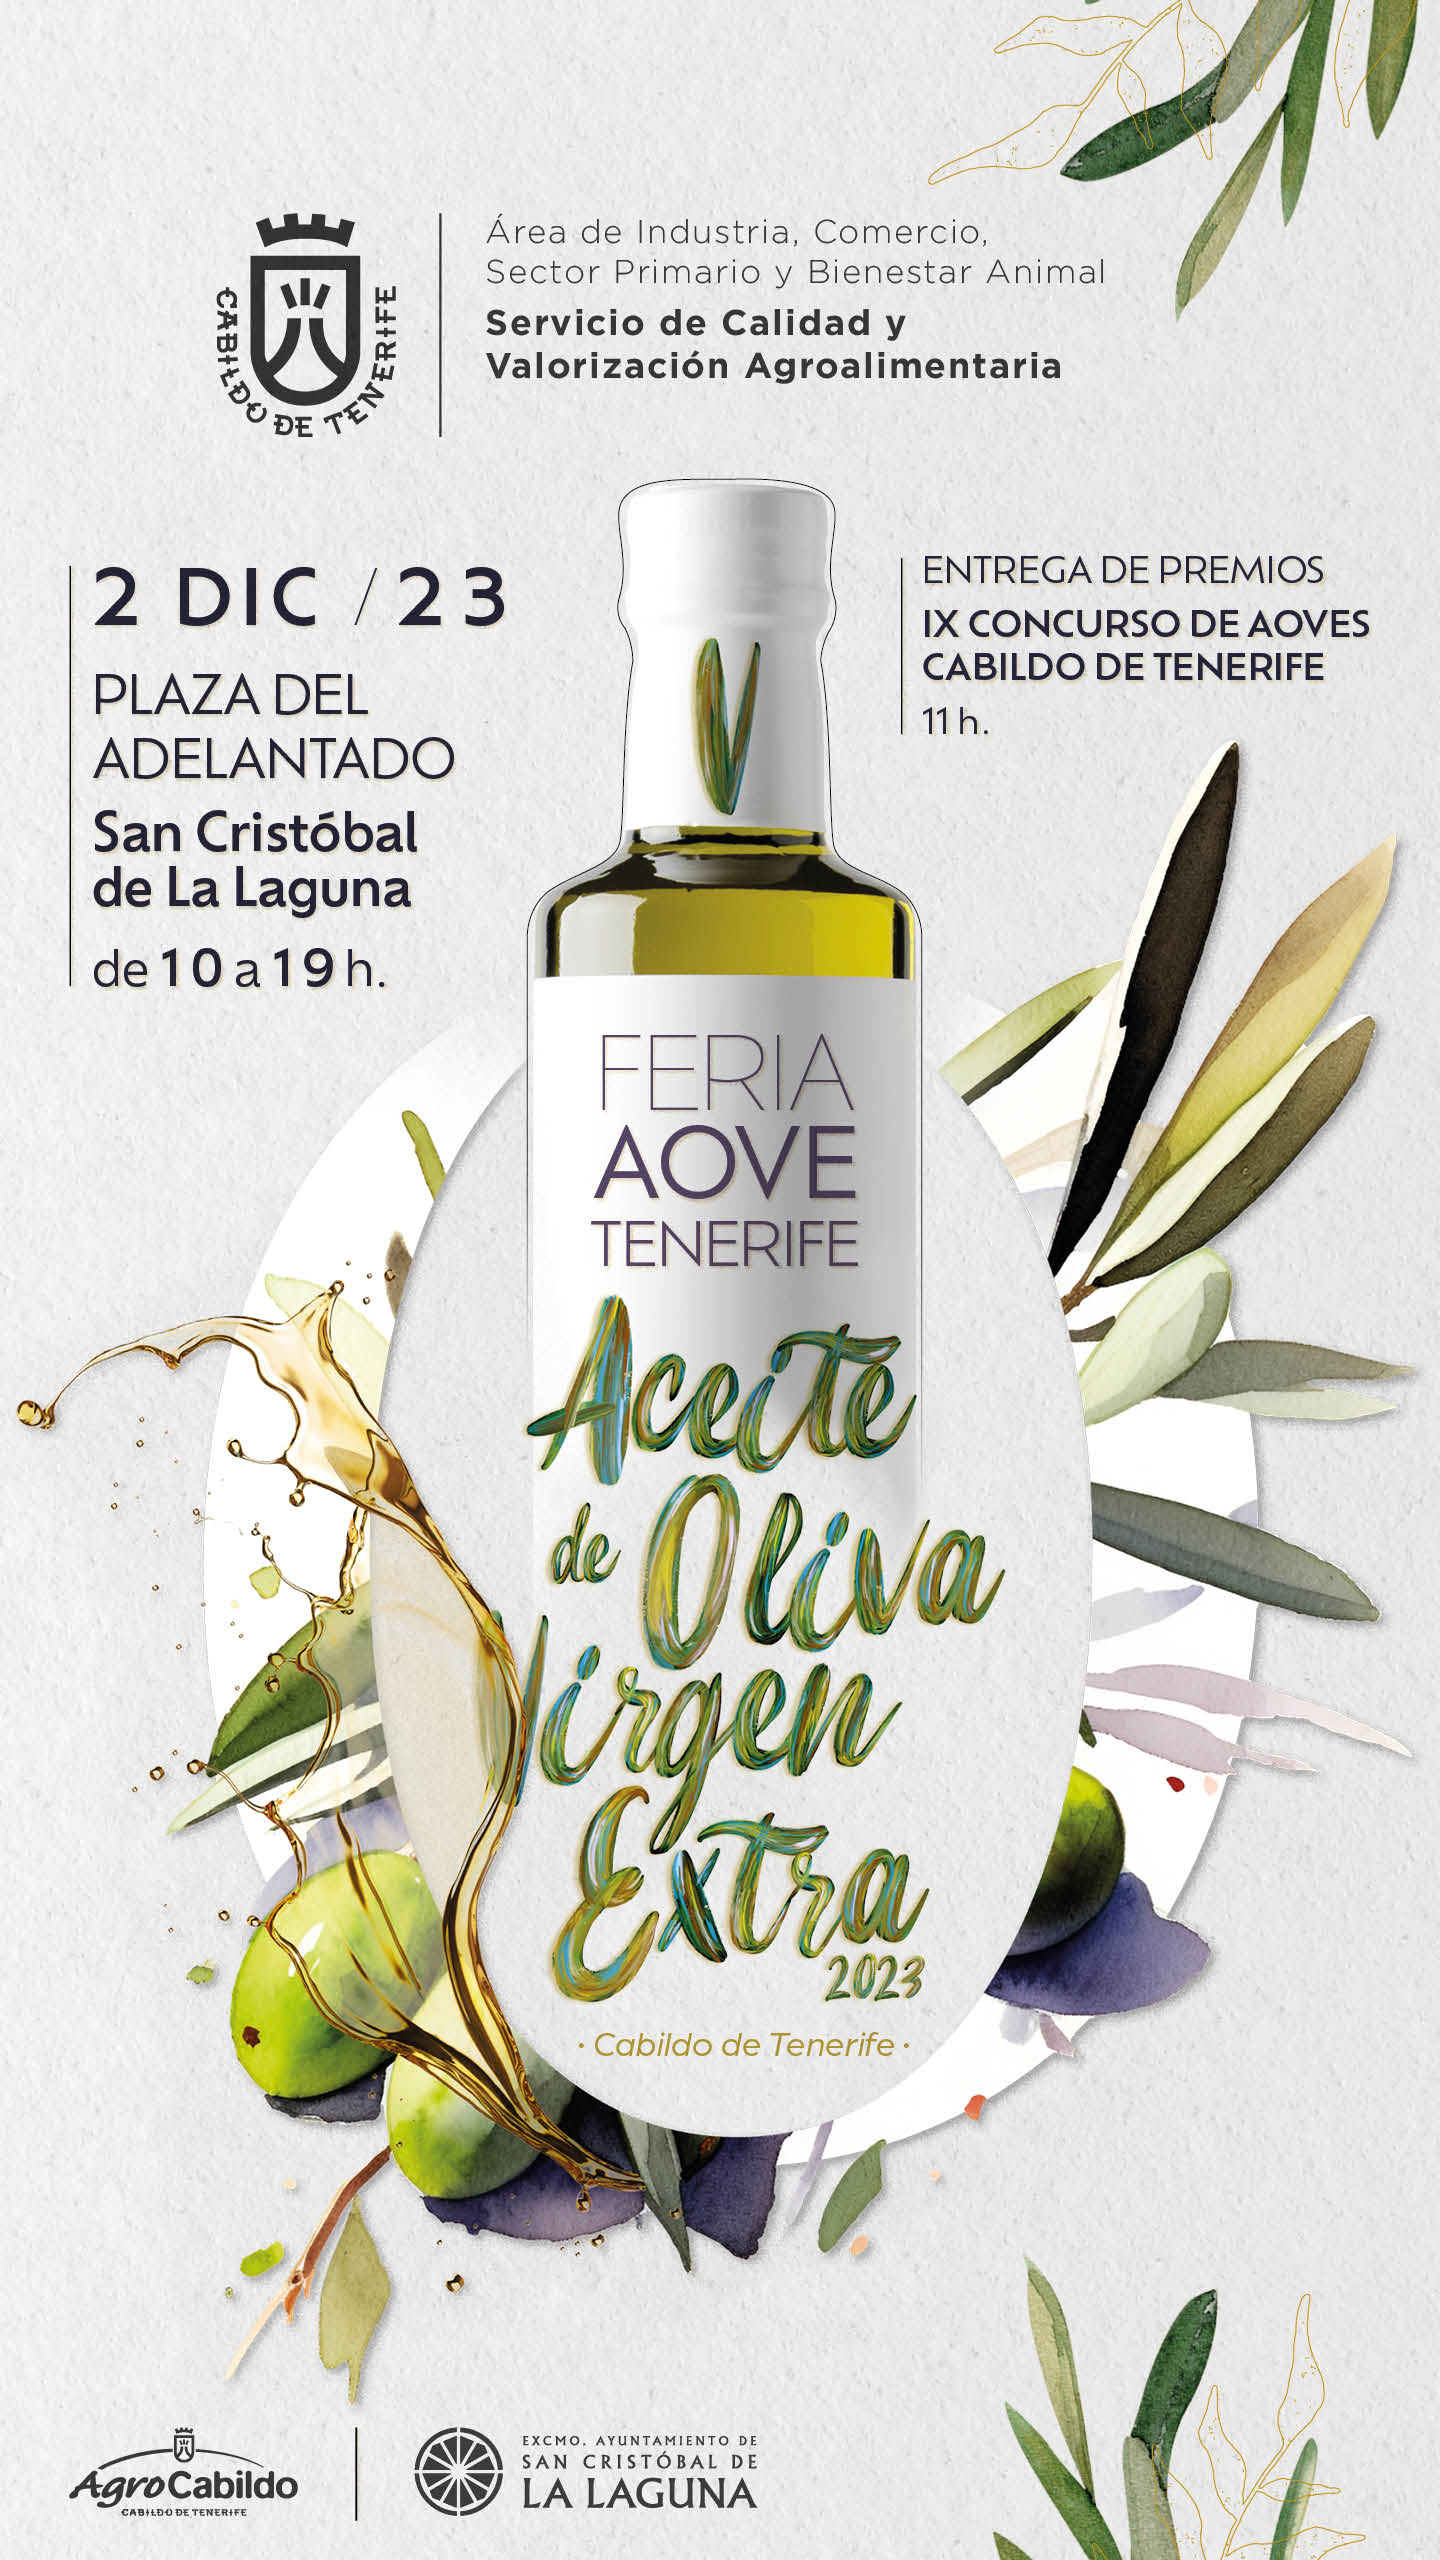 Feria AOVE, Aceite de Oliva Virgen Extra 2023